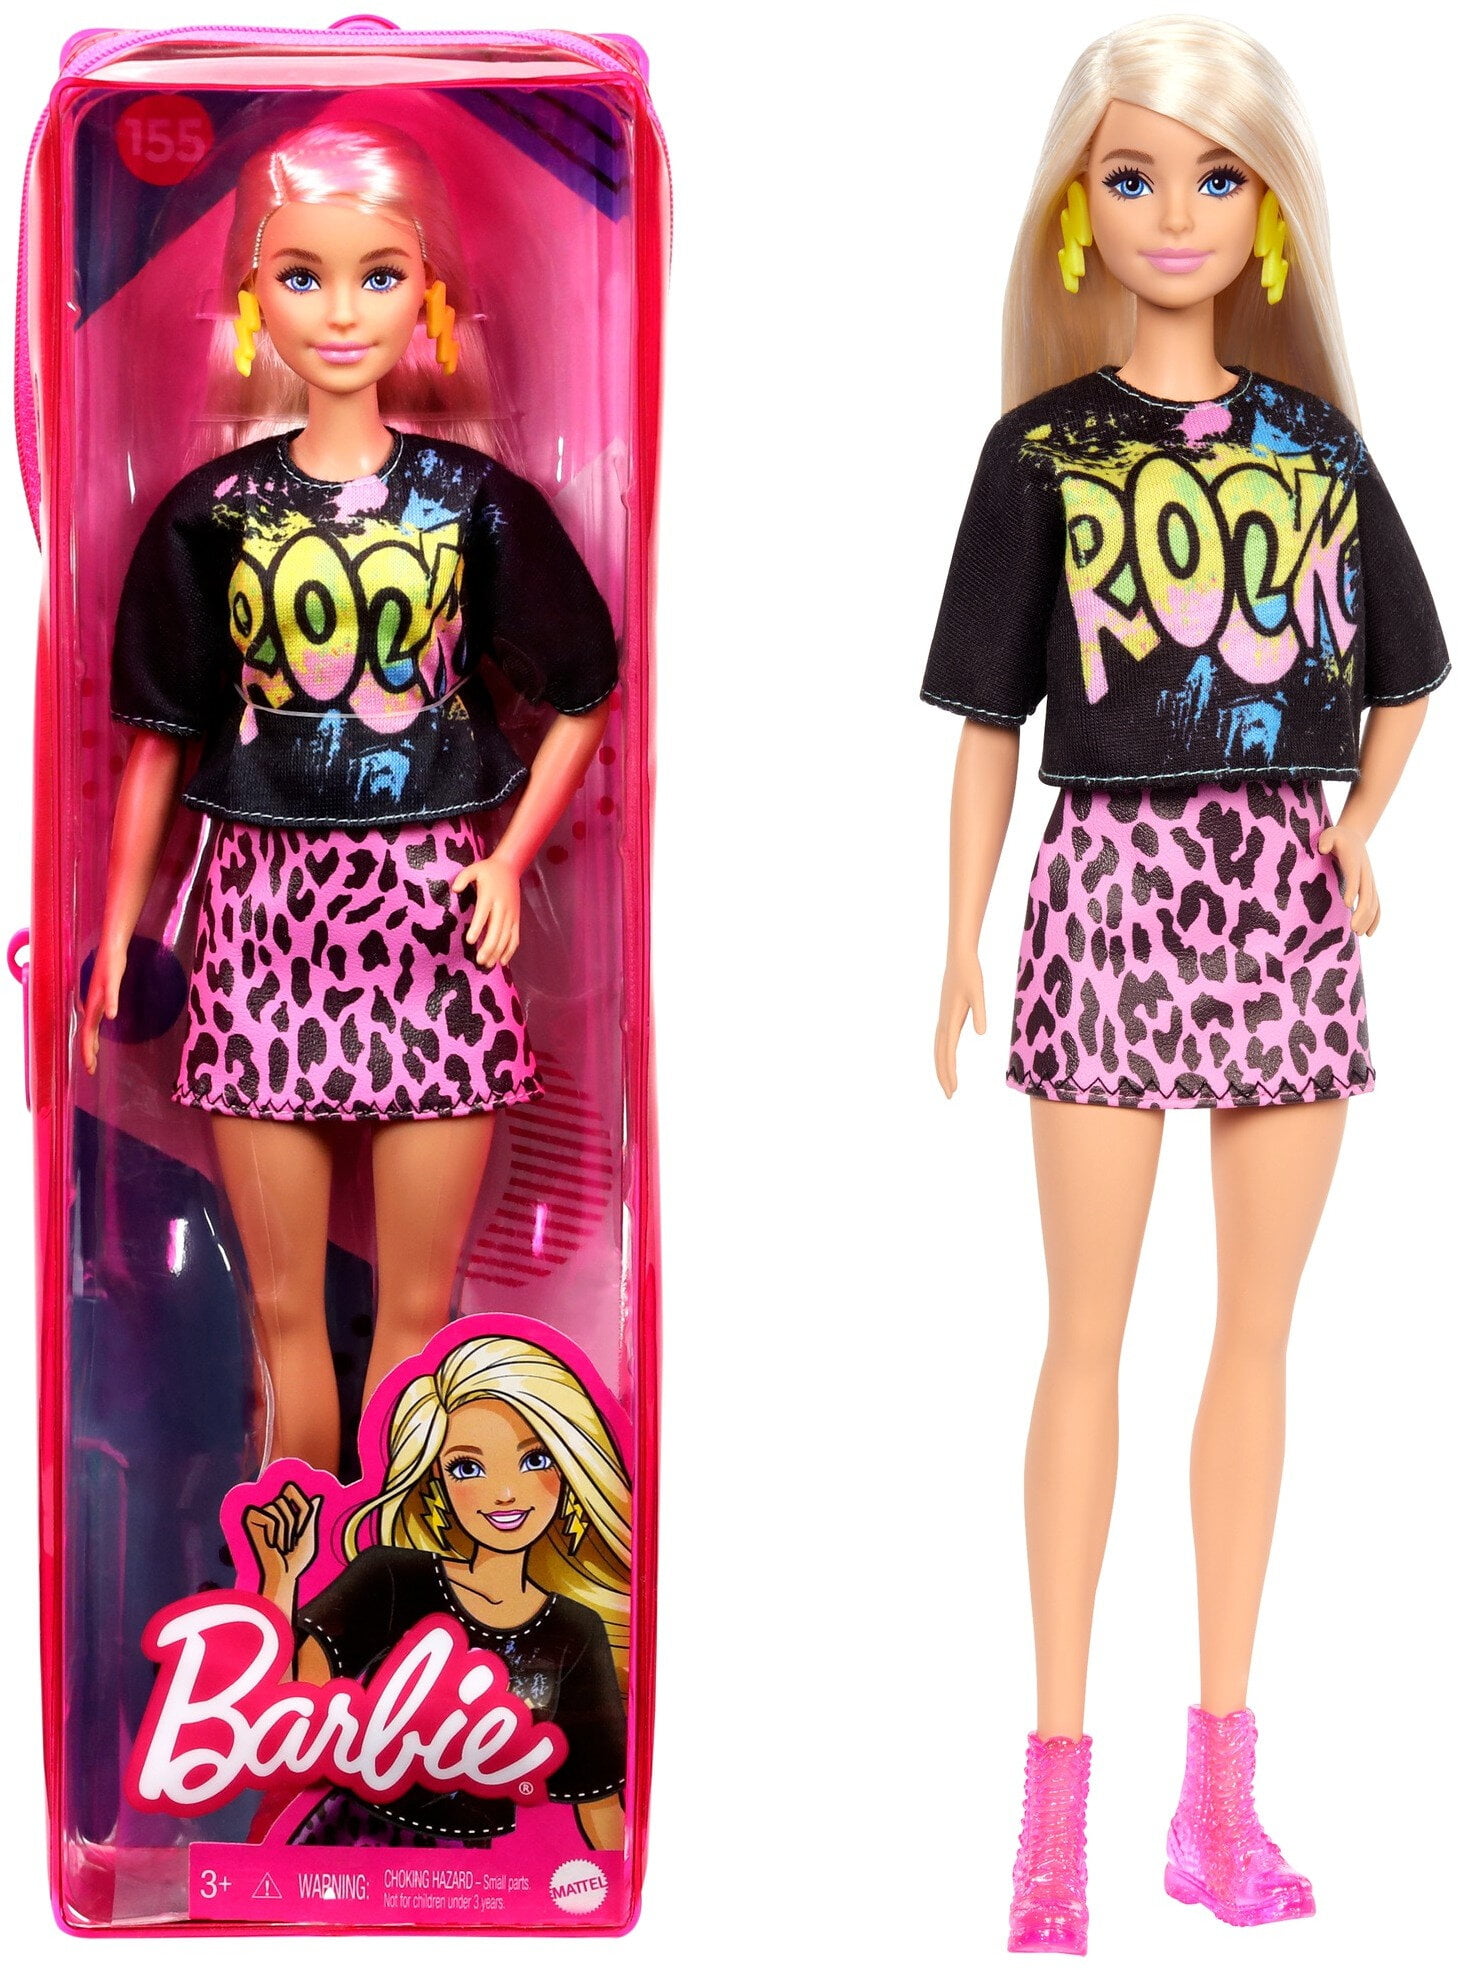 Barbie white doll trash 